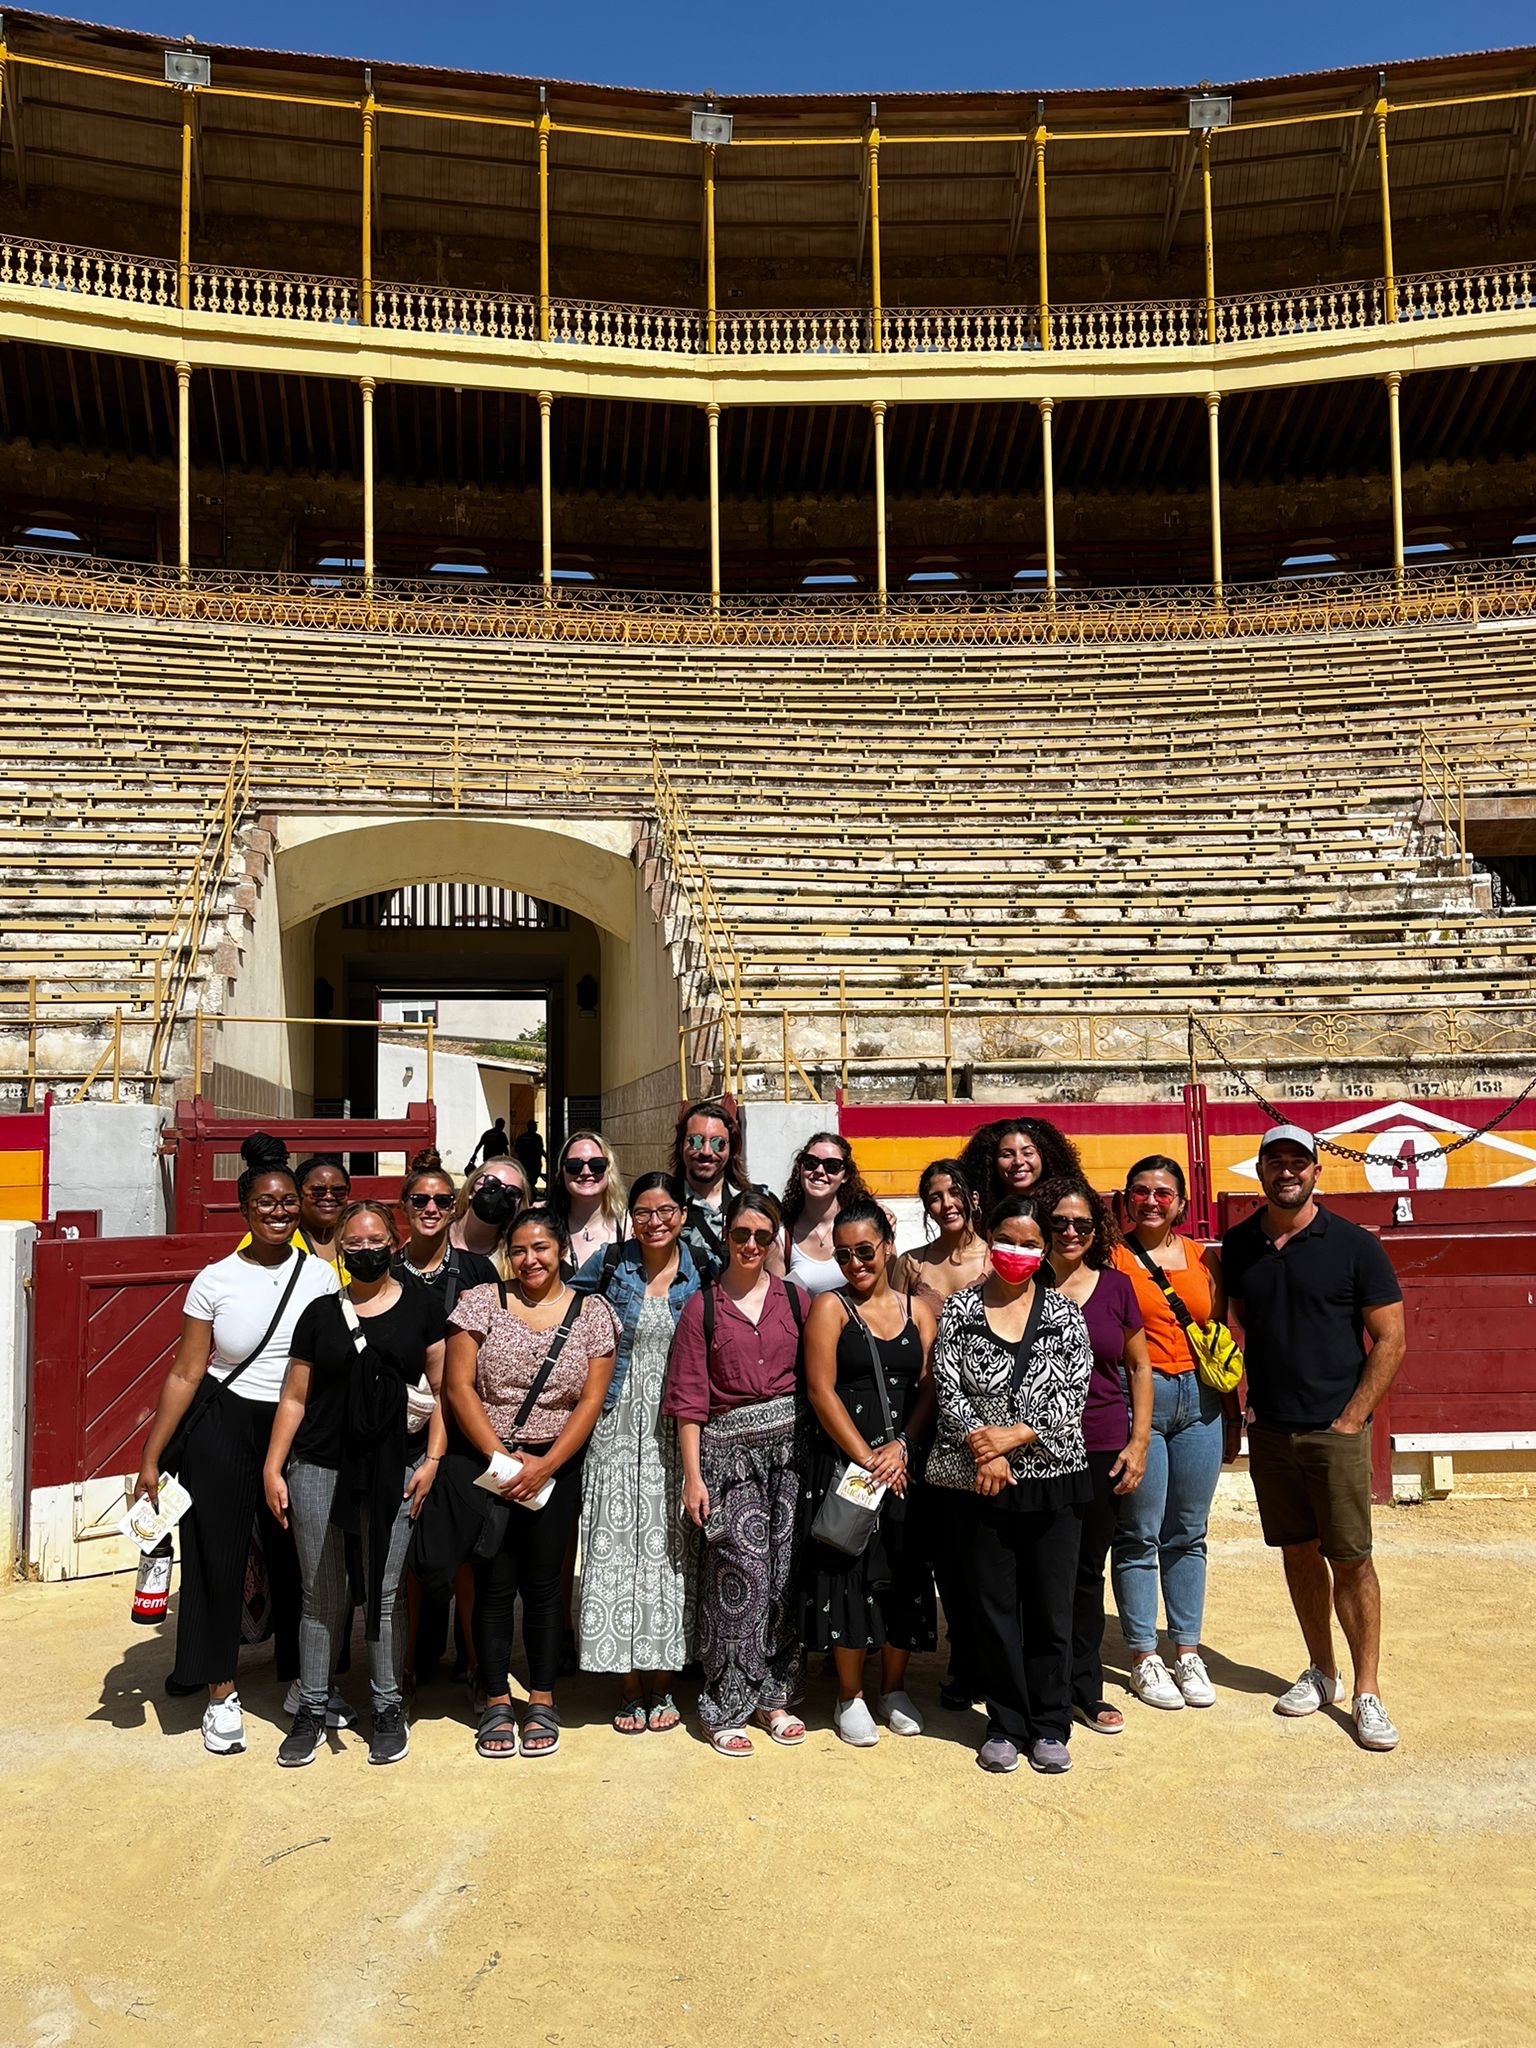 Students in Spain at bullfighting arena